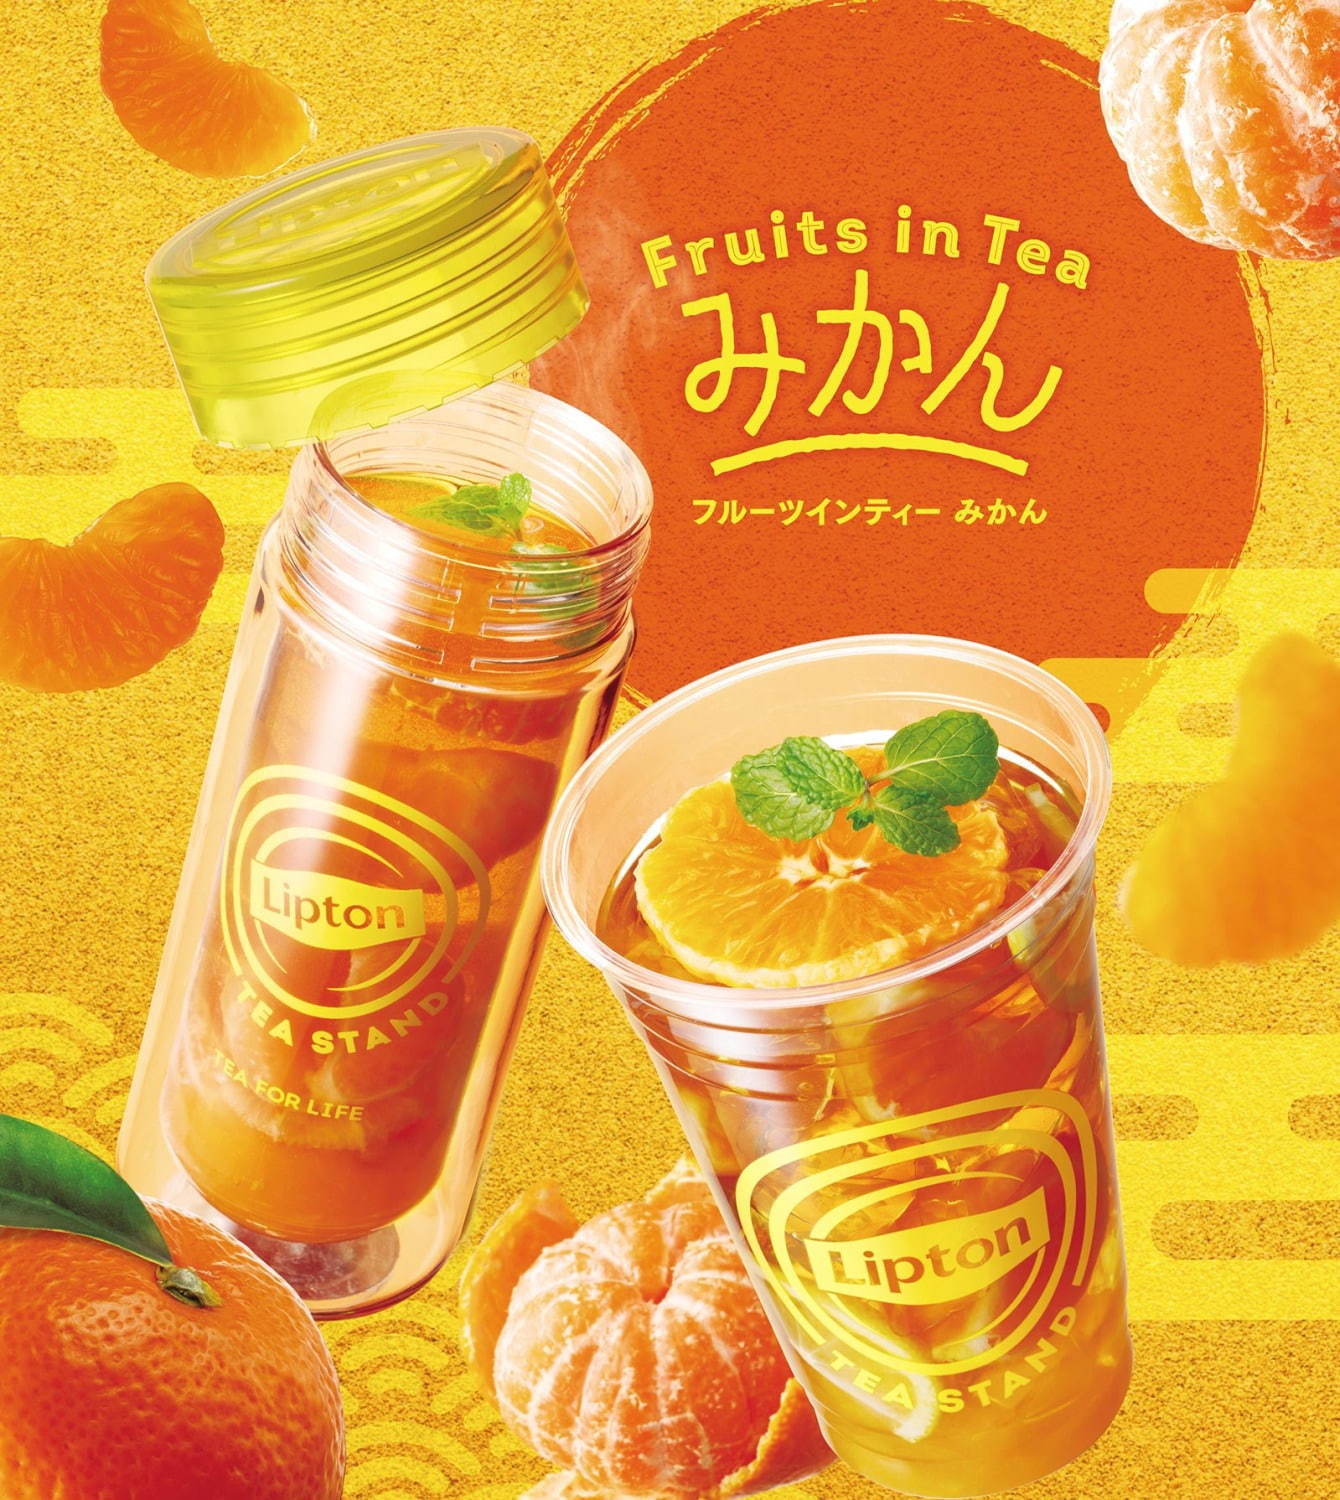 Fruits in Teaみかん(ICE/HOT)
カップ 850円(税込)／タンブラー (ICE)1,350円(税込)、(HOT)1,850円(税込)